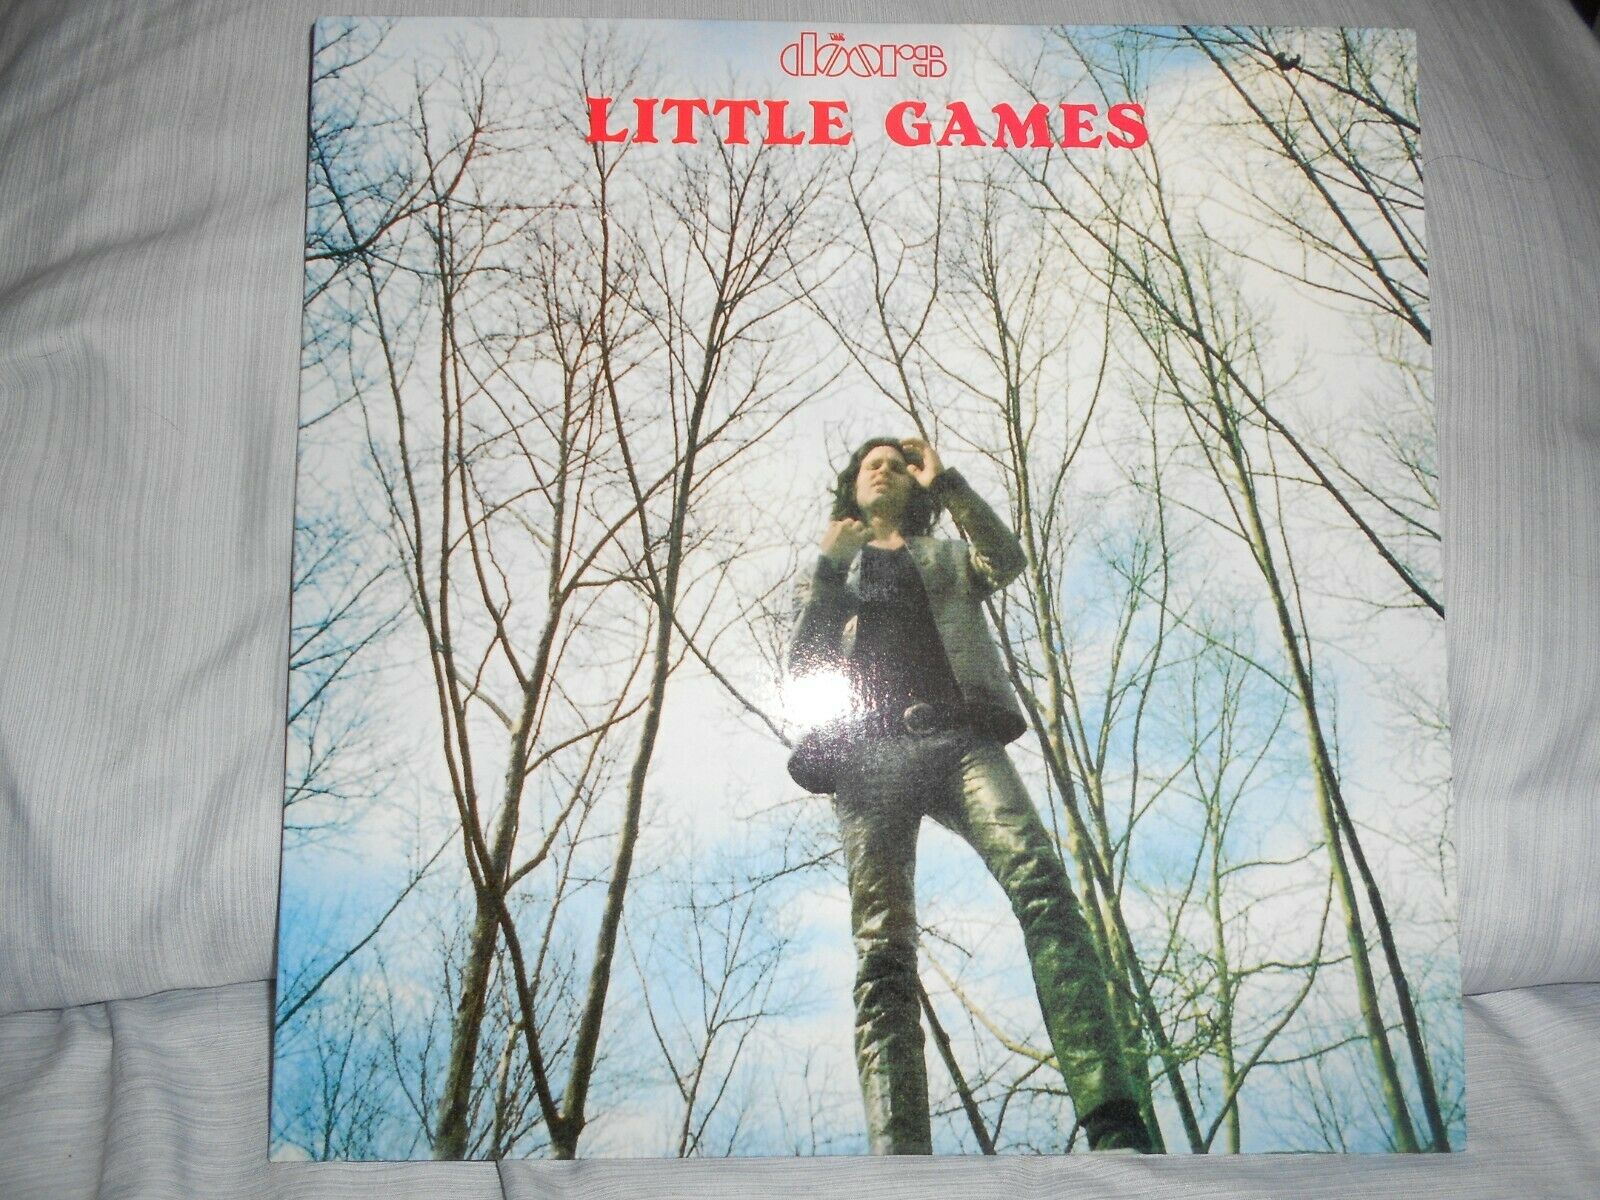 popsike.com - DOORS "Little Games - Complete Stockholm Tapes 1968" 2X Vinyl  LP Never Played - auction details